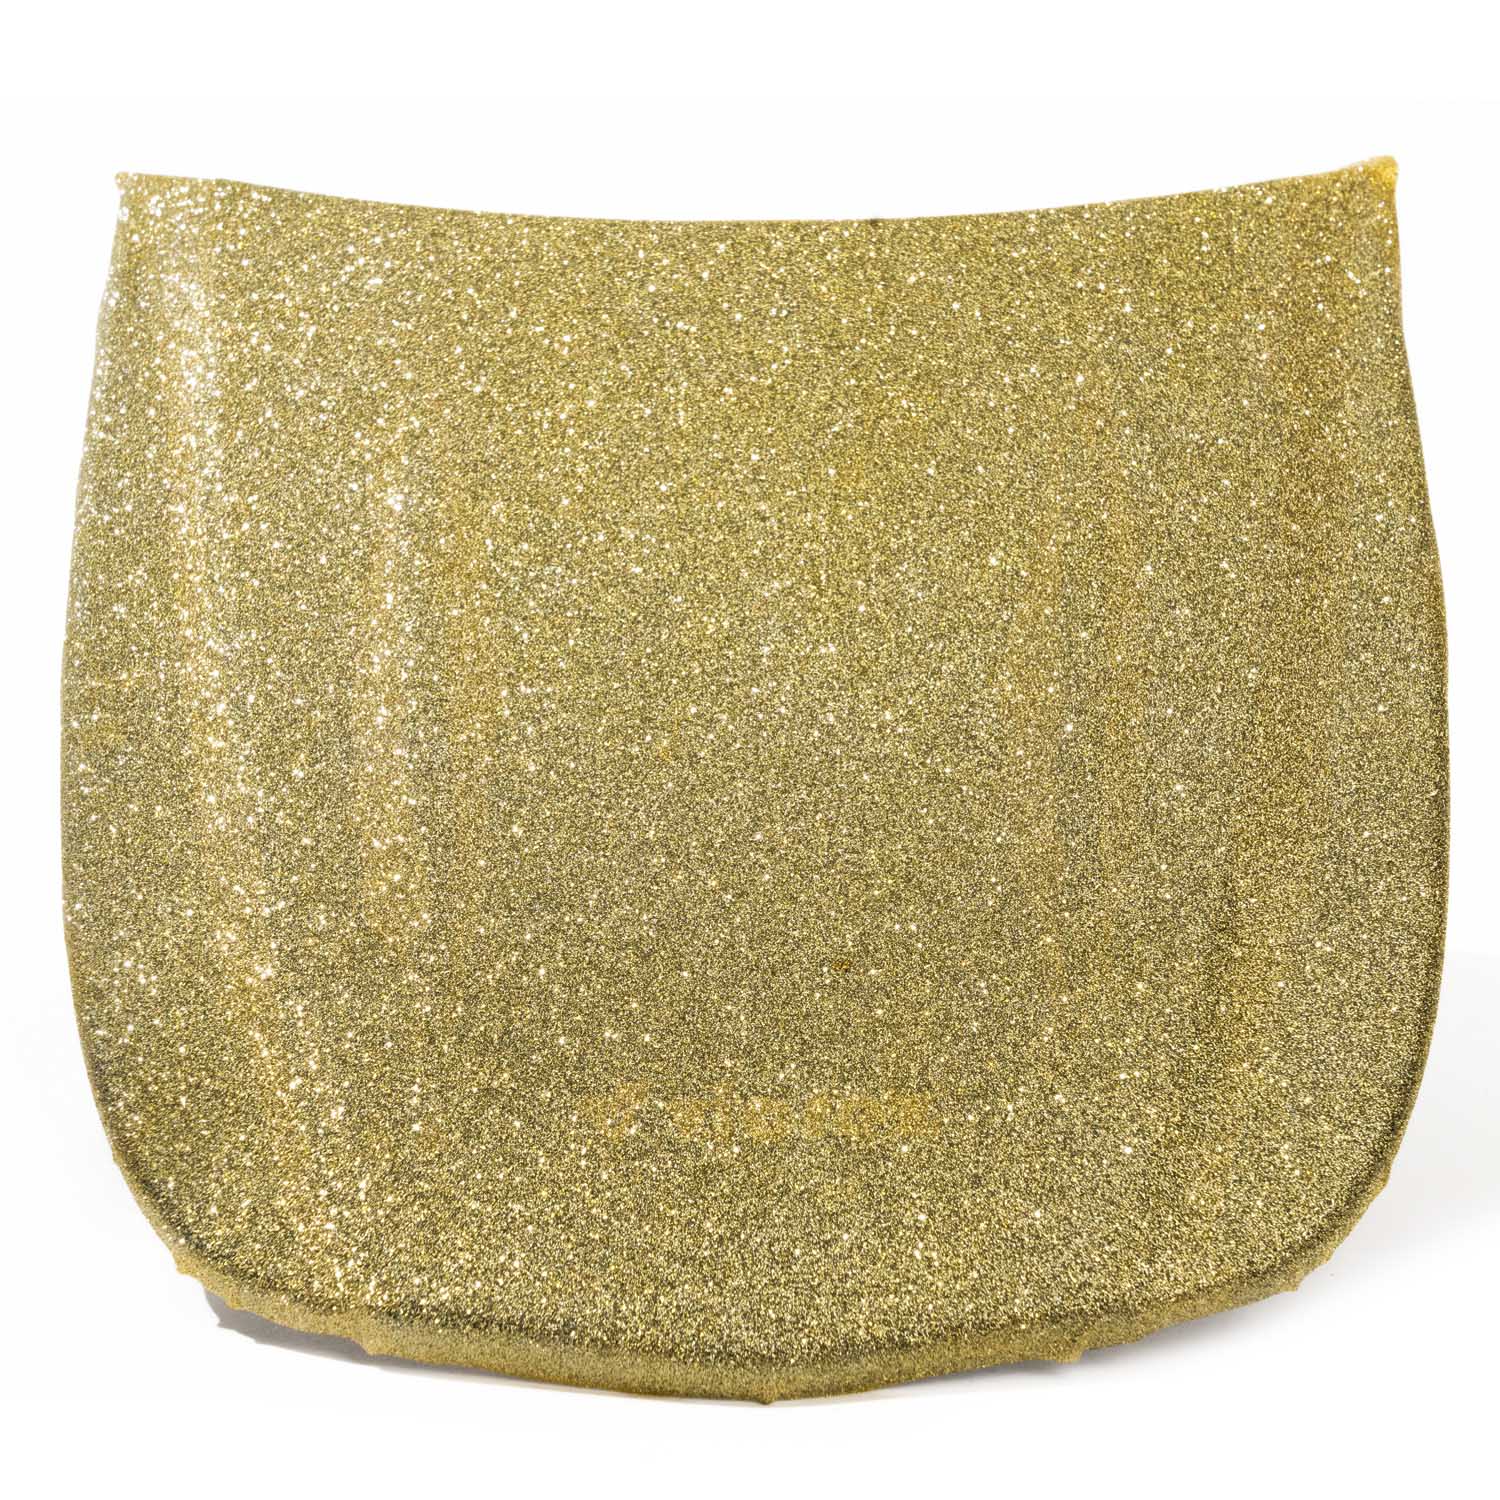 Glitterfolie selbstklebend - 50 x 70cm Rolle, gold